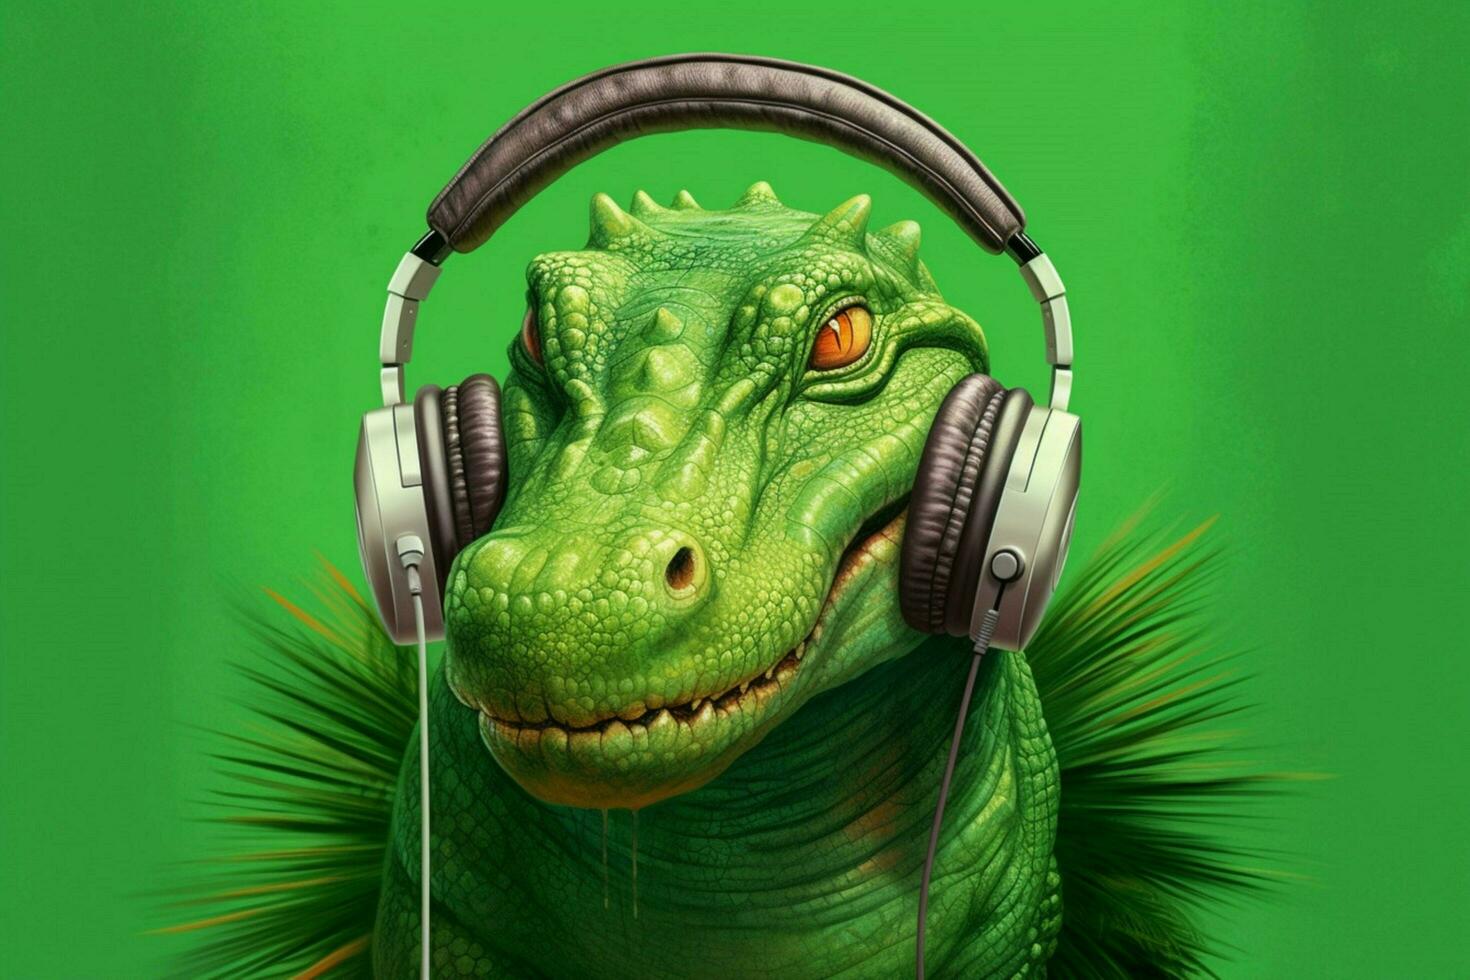 a green crocodile with headphones on it photo